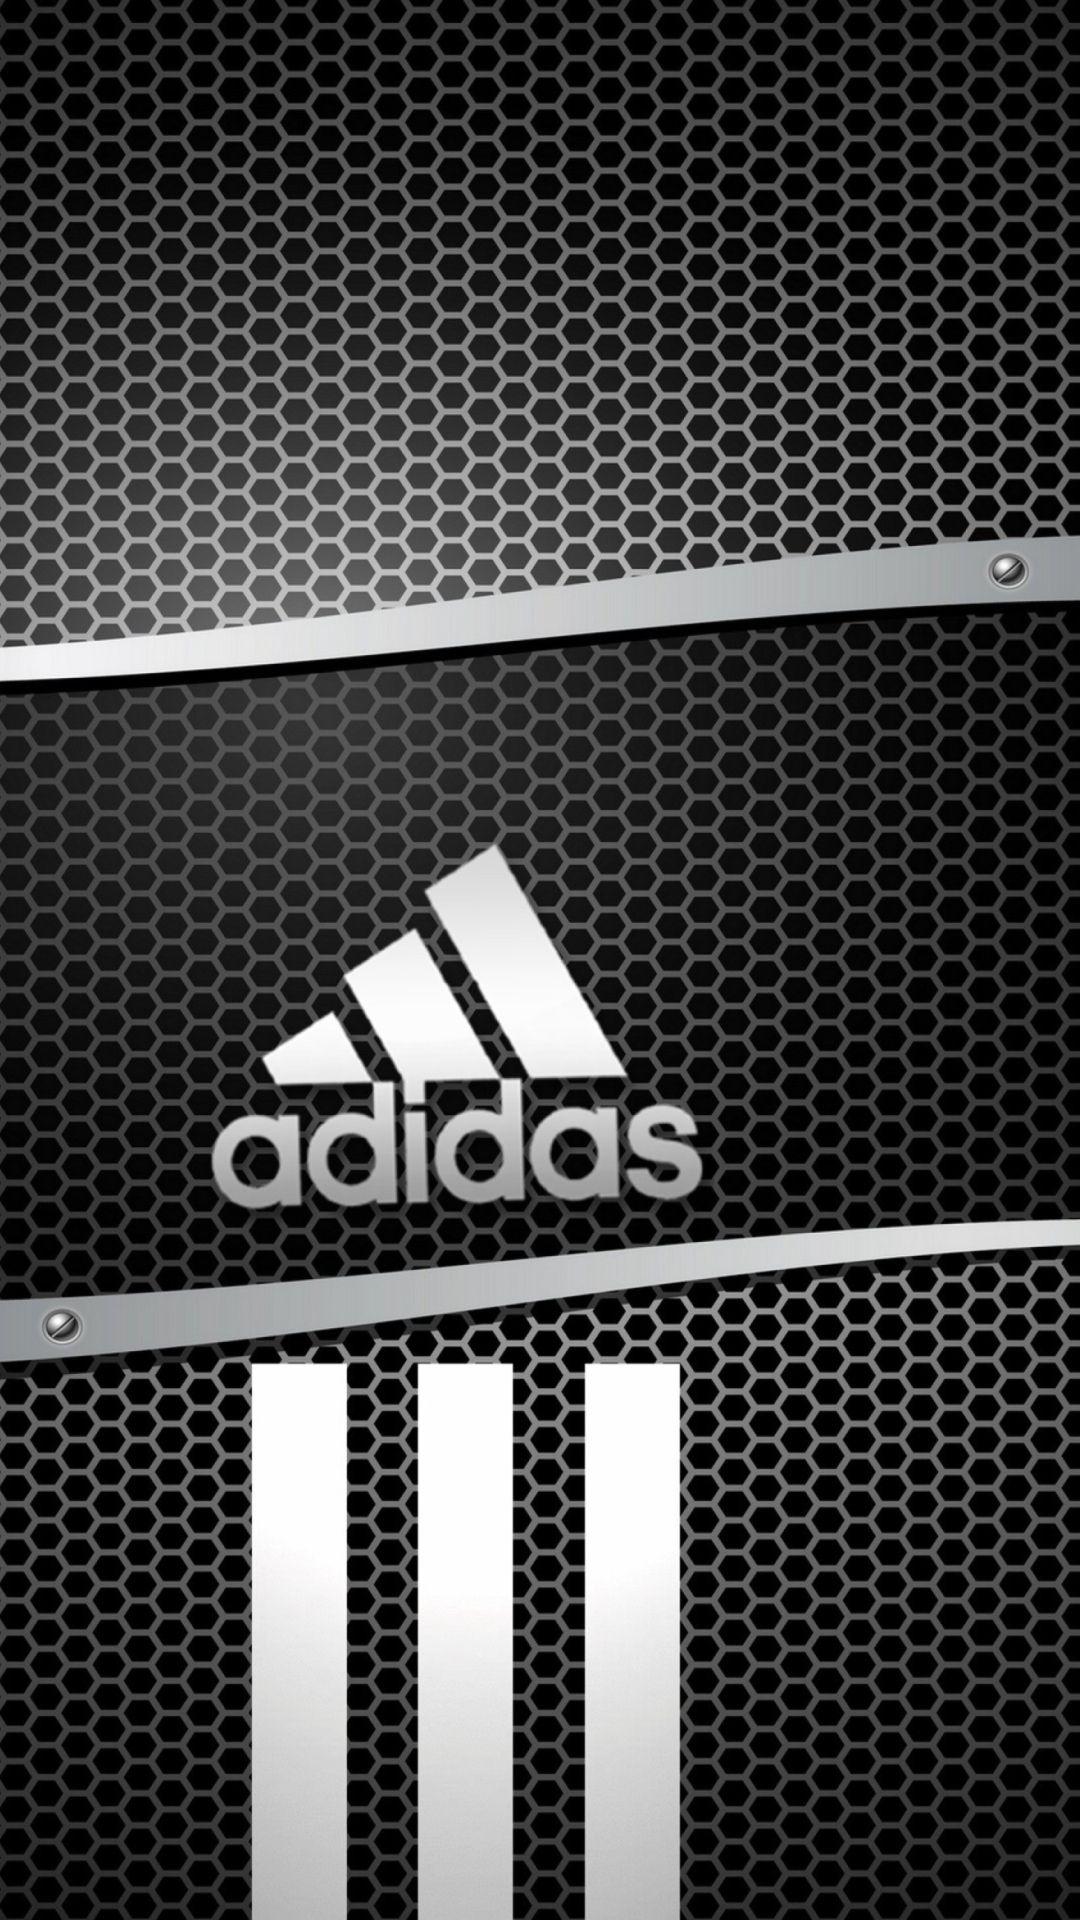 Adidas iPhone 7 Wallpaper With highresolution 1080X1920 pixel You can use  this wallpaper for your i  Adidas fondos de pantalla Fondos de nike  Fondos de adidas